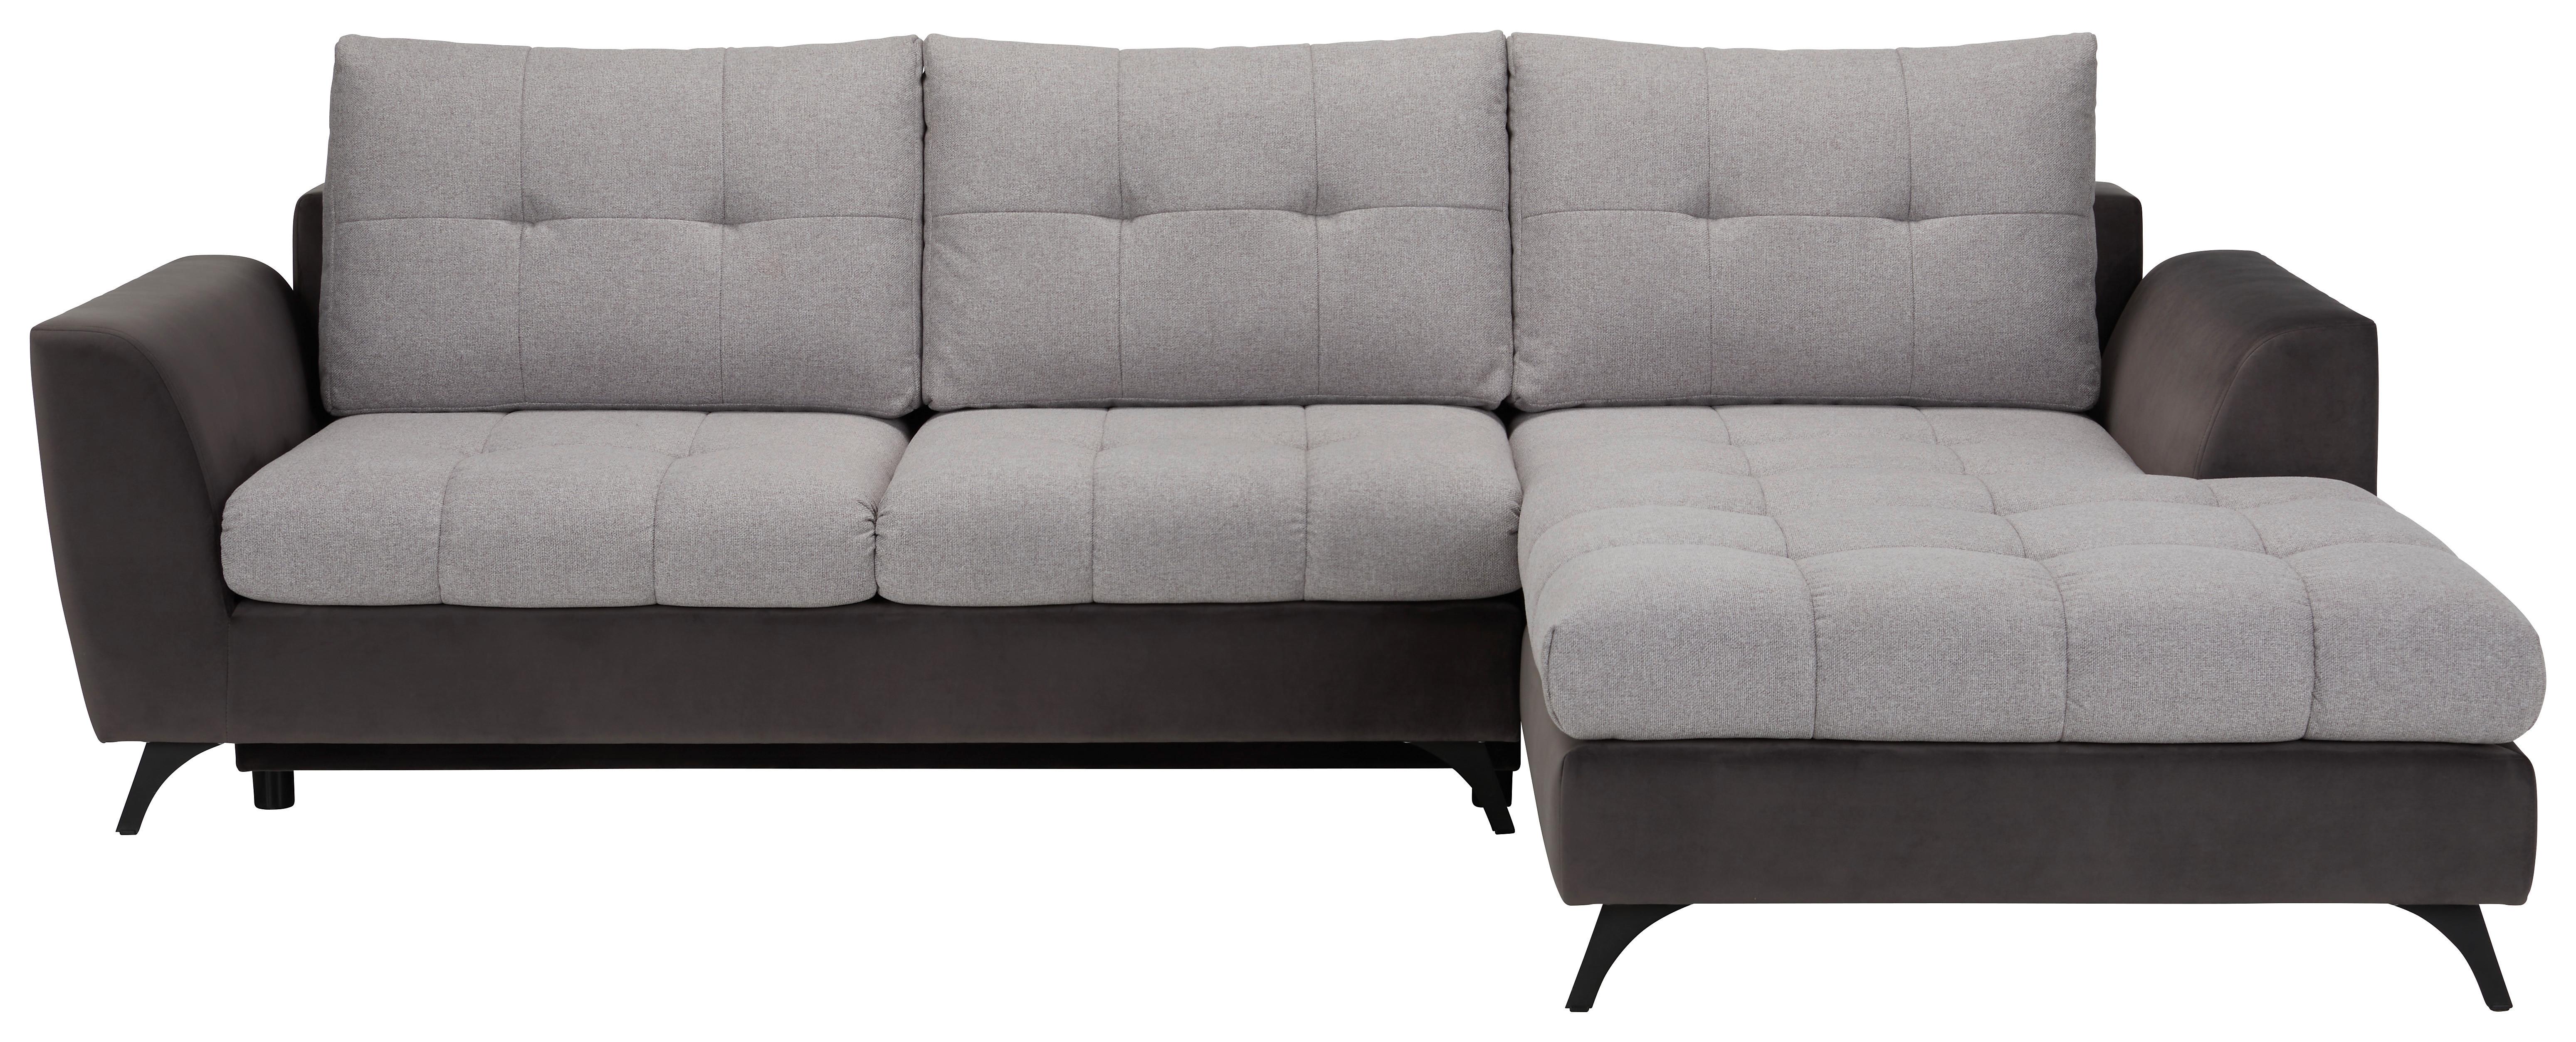 Sedežna Garnitura Dallas -Top- - siva/črna, Moderno, kovina/umetna masa (273/89/182cm) - Modern Living